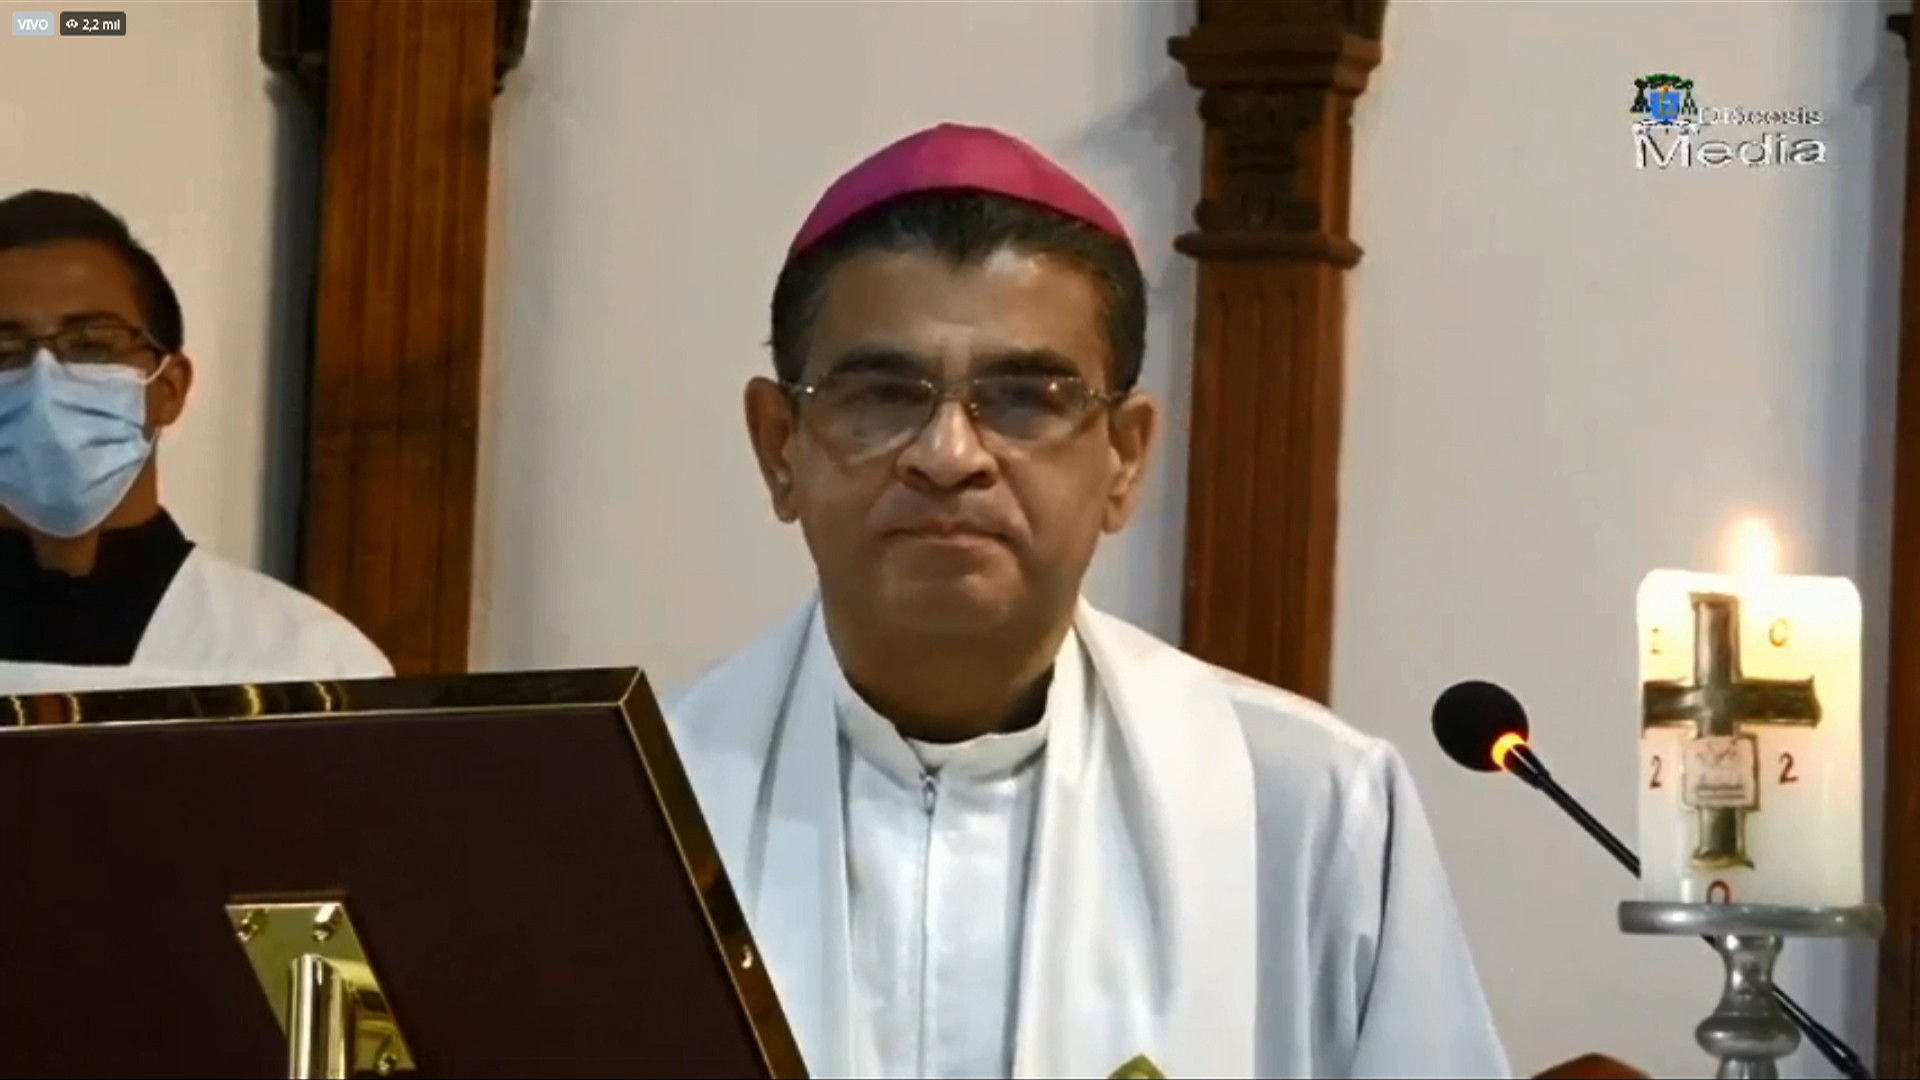 El obispo nicaragüense Rolando Álvarez, crítico con el régimen del presidente Daniel Ortega